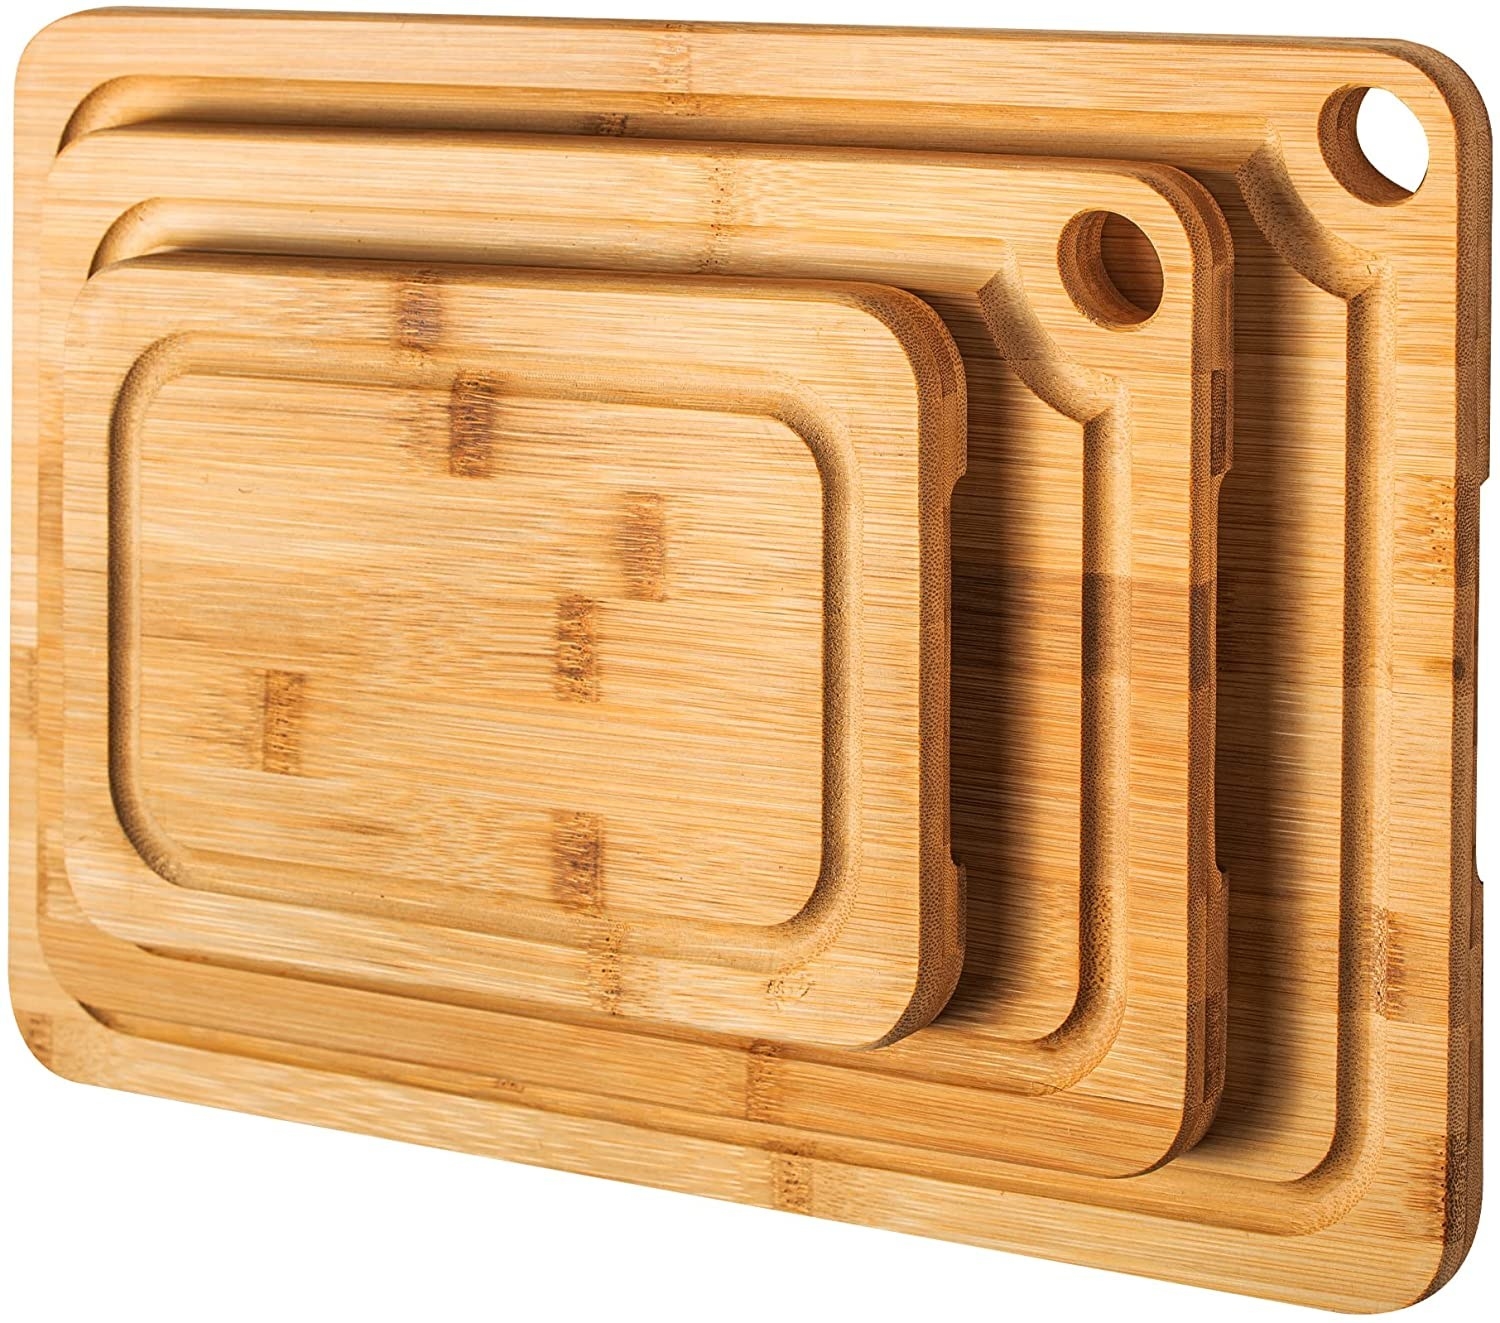 three wooden cutting boards